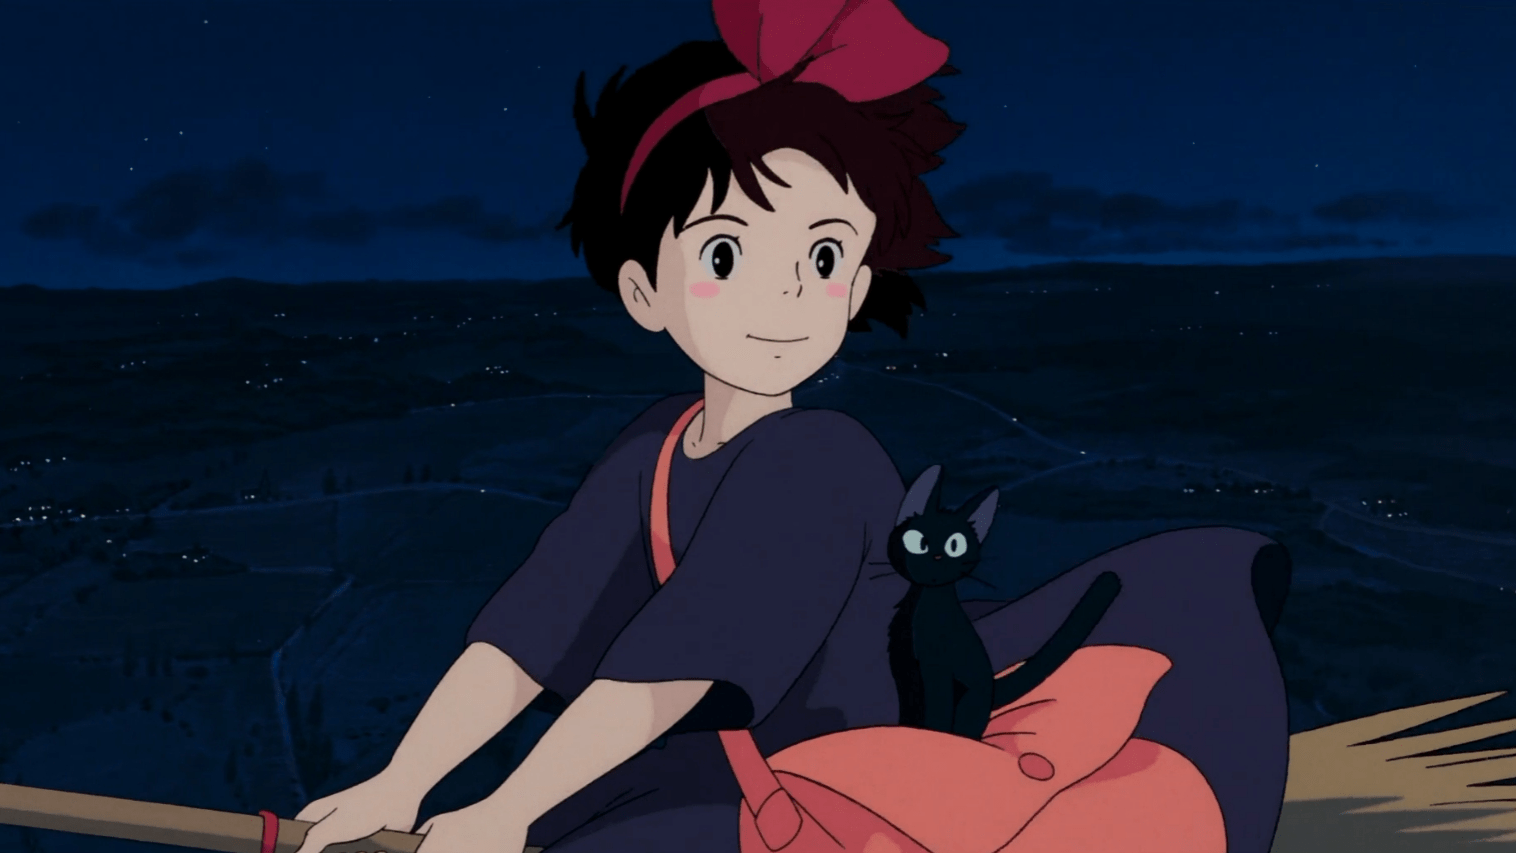 Kiki from Ghibli